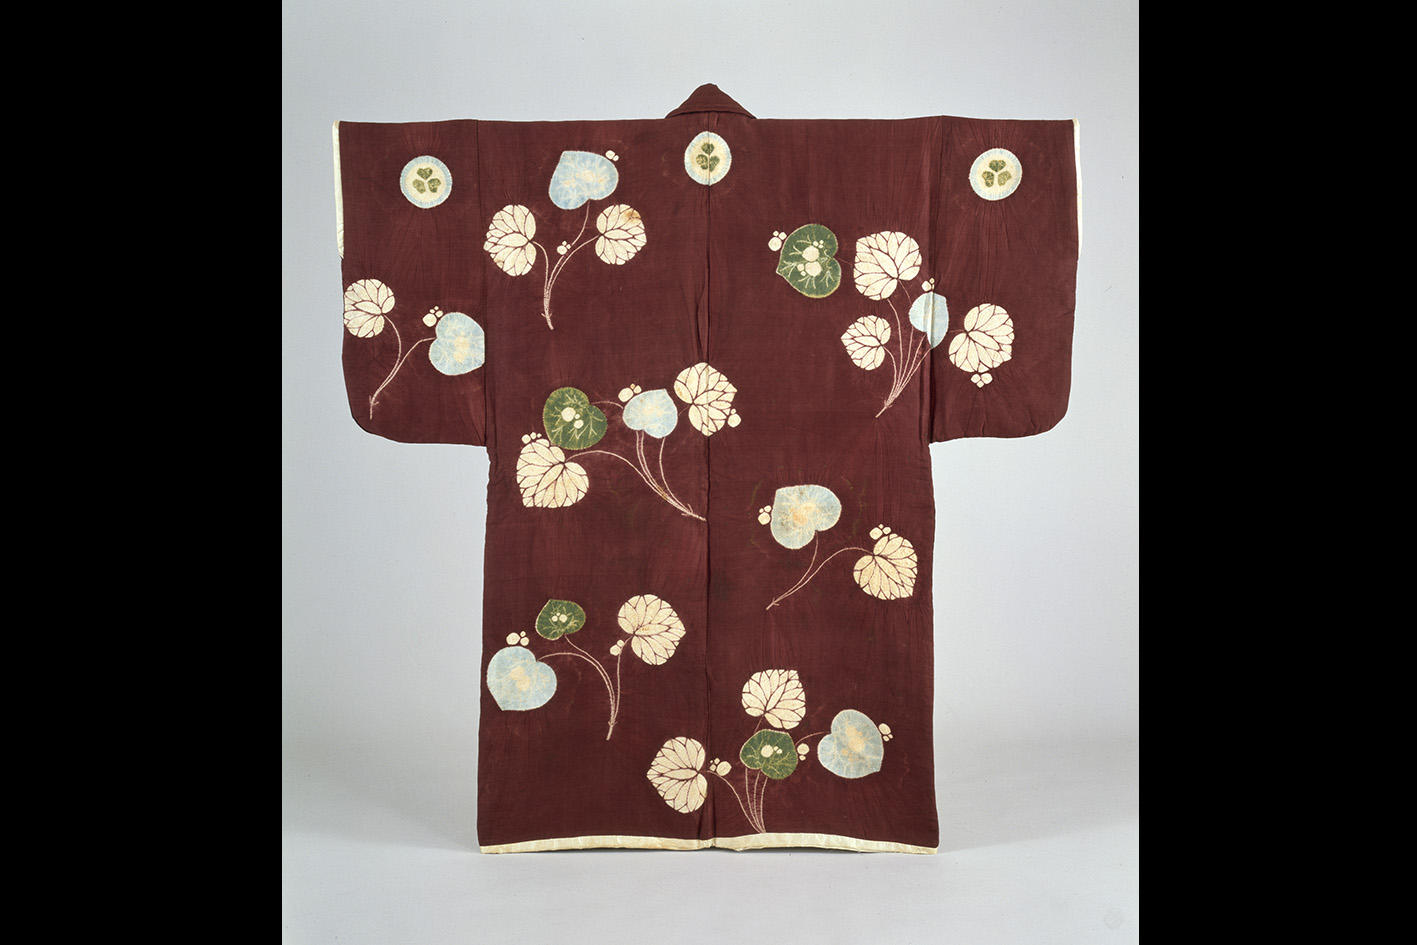 Haori Jacket, scattered aoi-leaf design, stitch-resist tie-dyeing